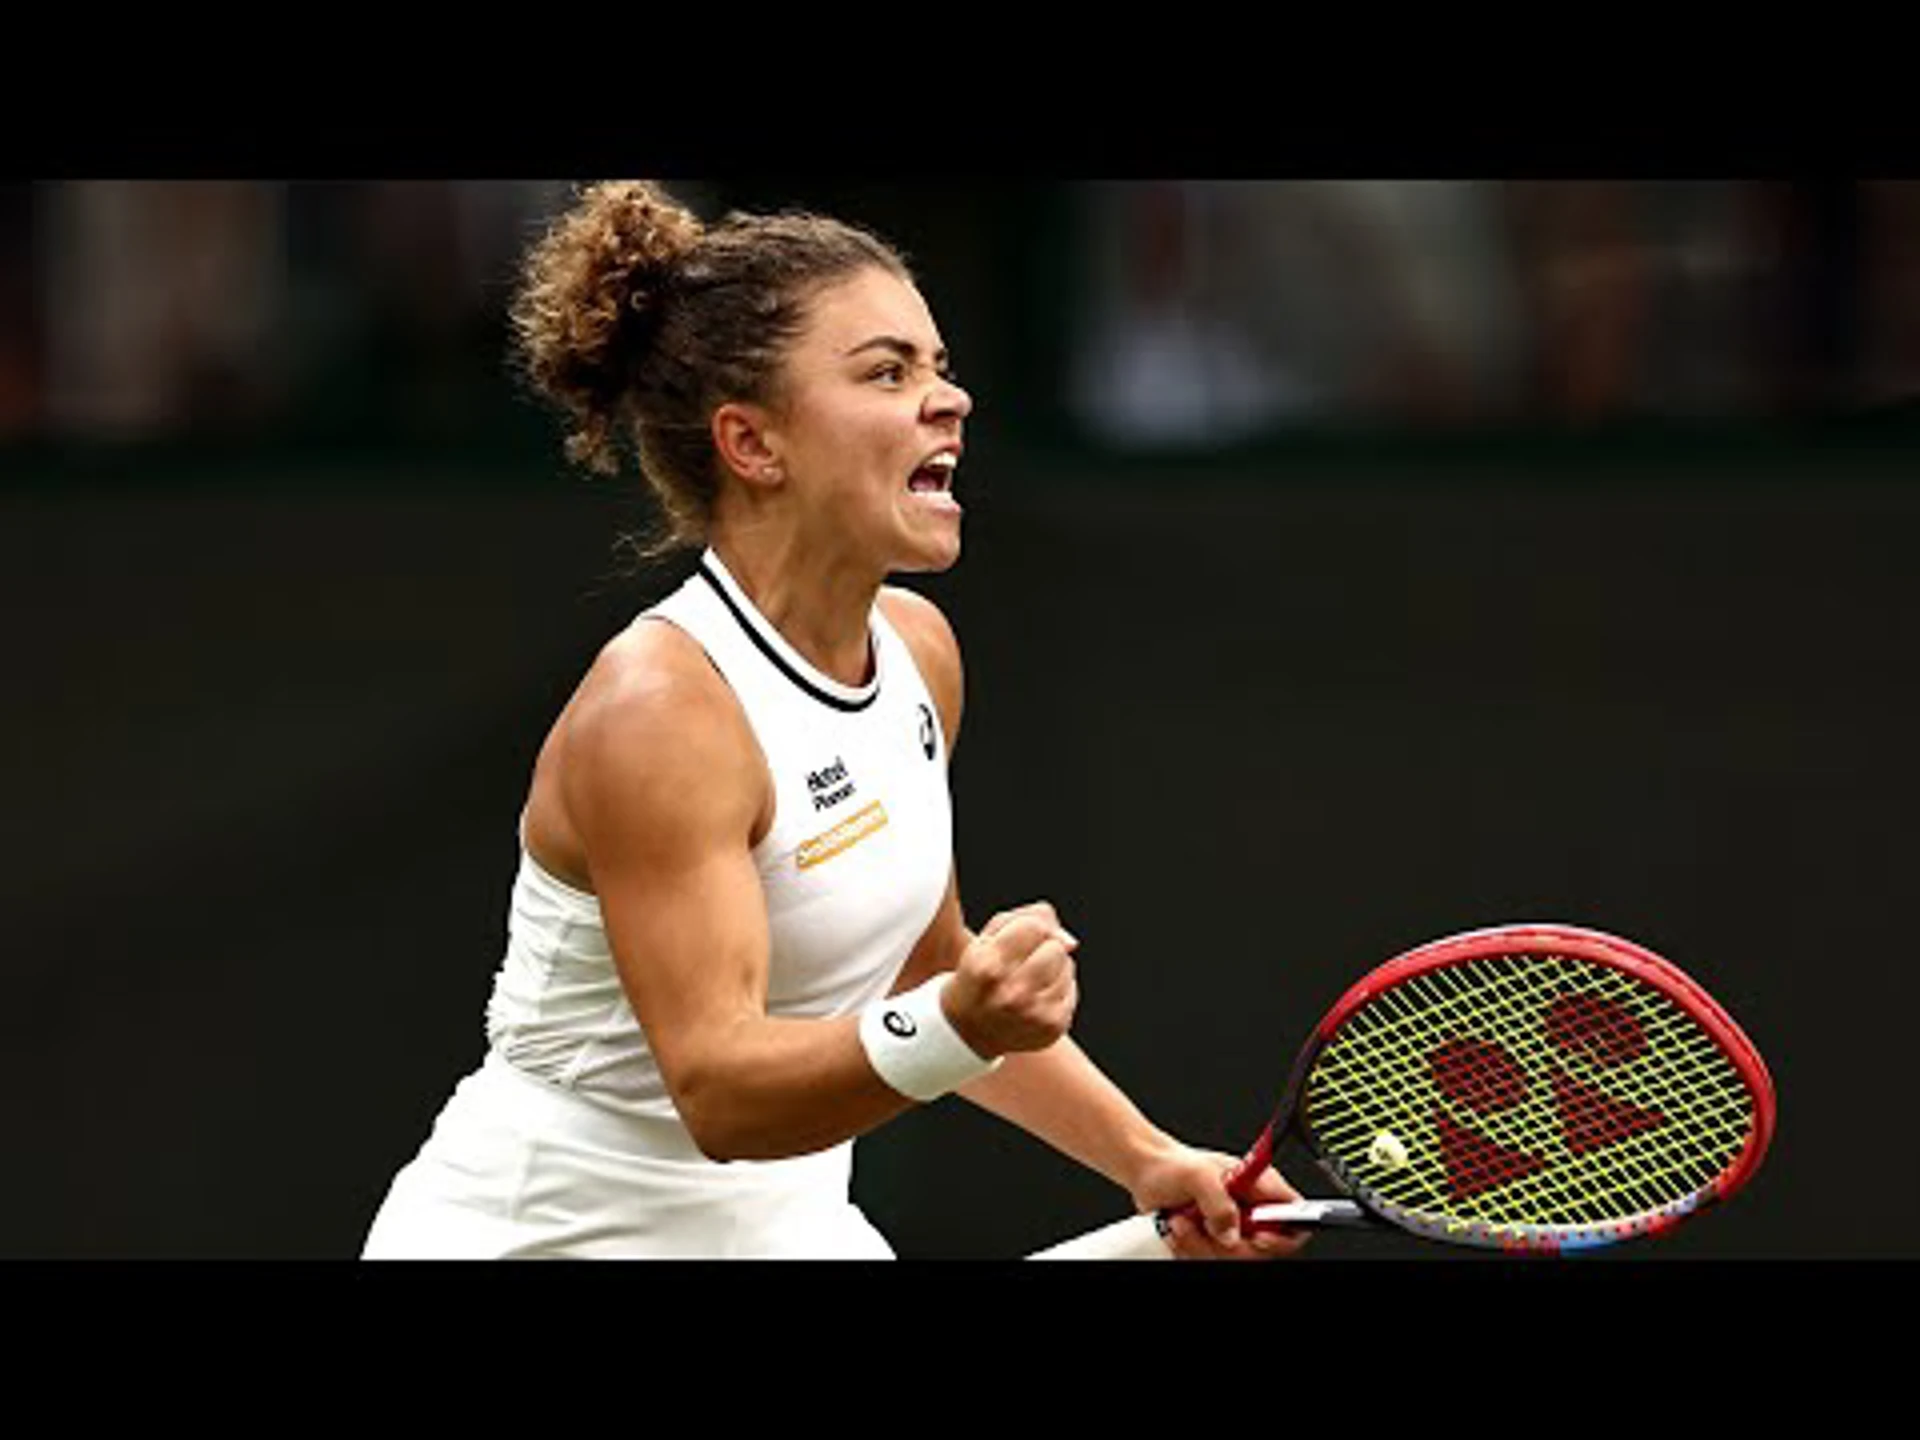 Jasmine Paolini v Madison Keys | Women's singles | 4th Round | Highlights | Wimbledon